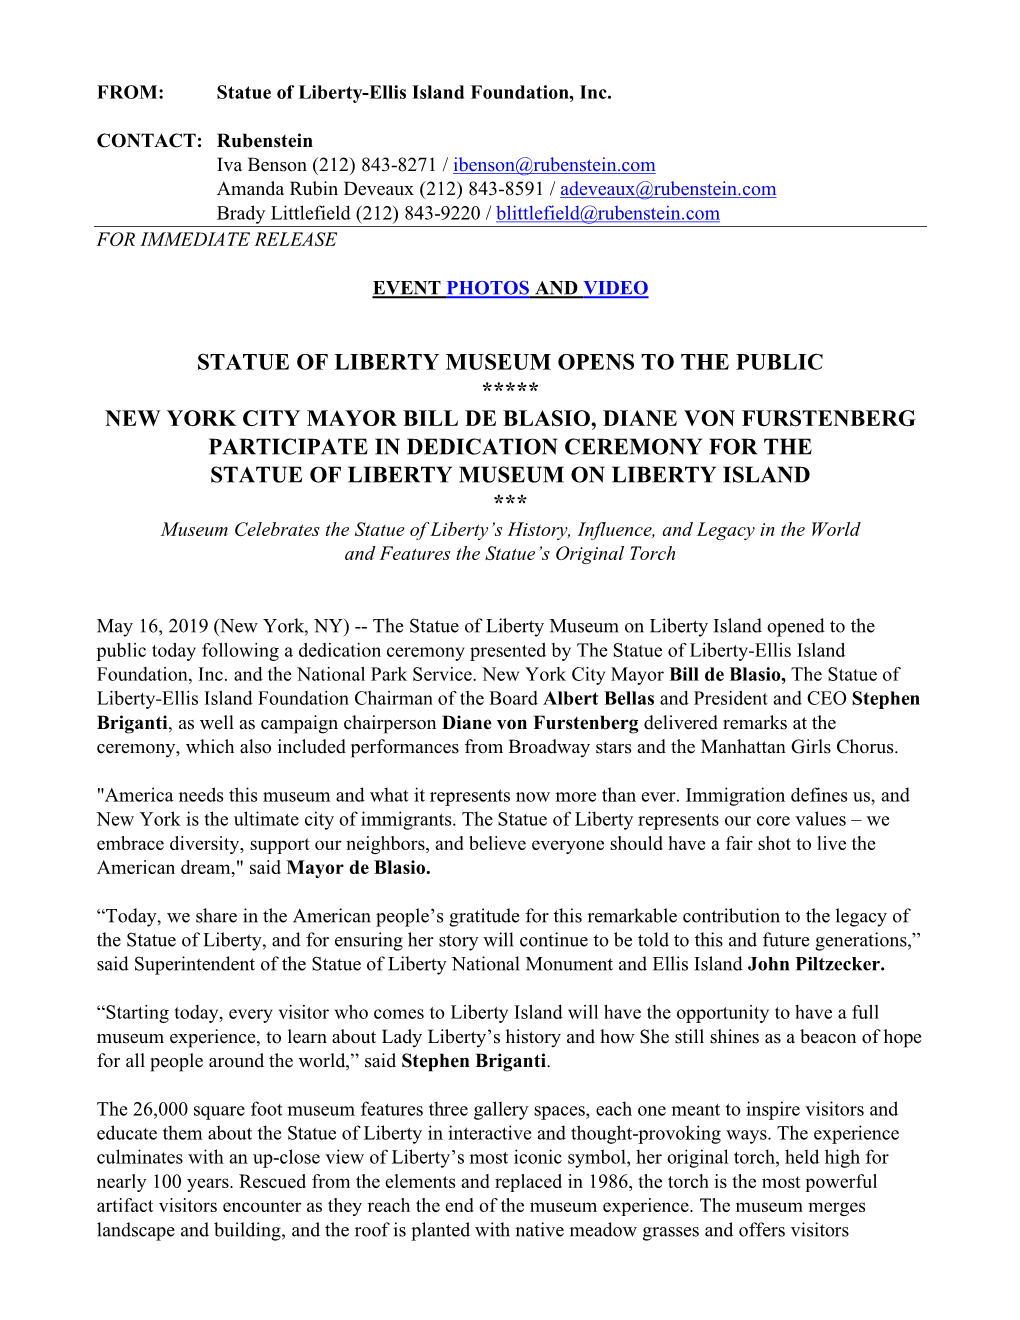 Statue of Liberty Museum Opens to the Public ***** New York City Mayor Bill De Blasio, Diane Von Furstenberg Participate in Dedi